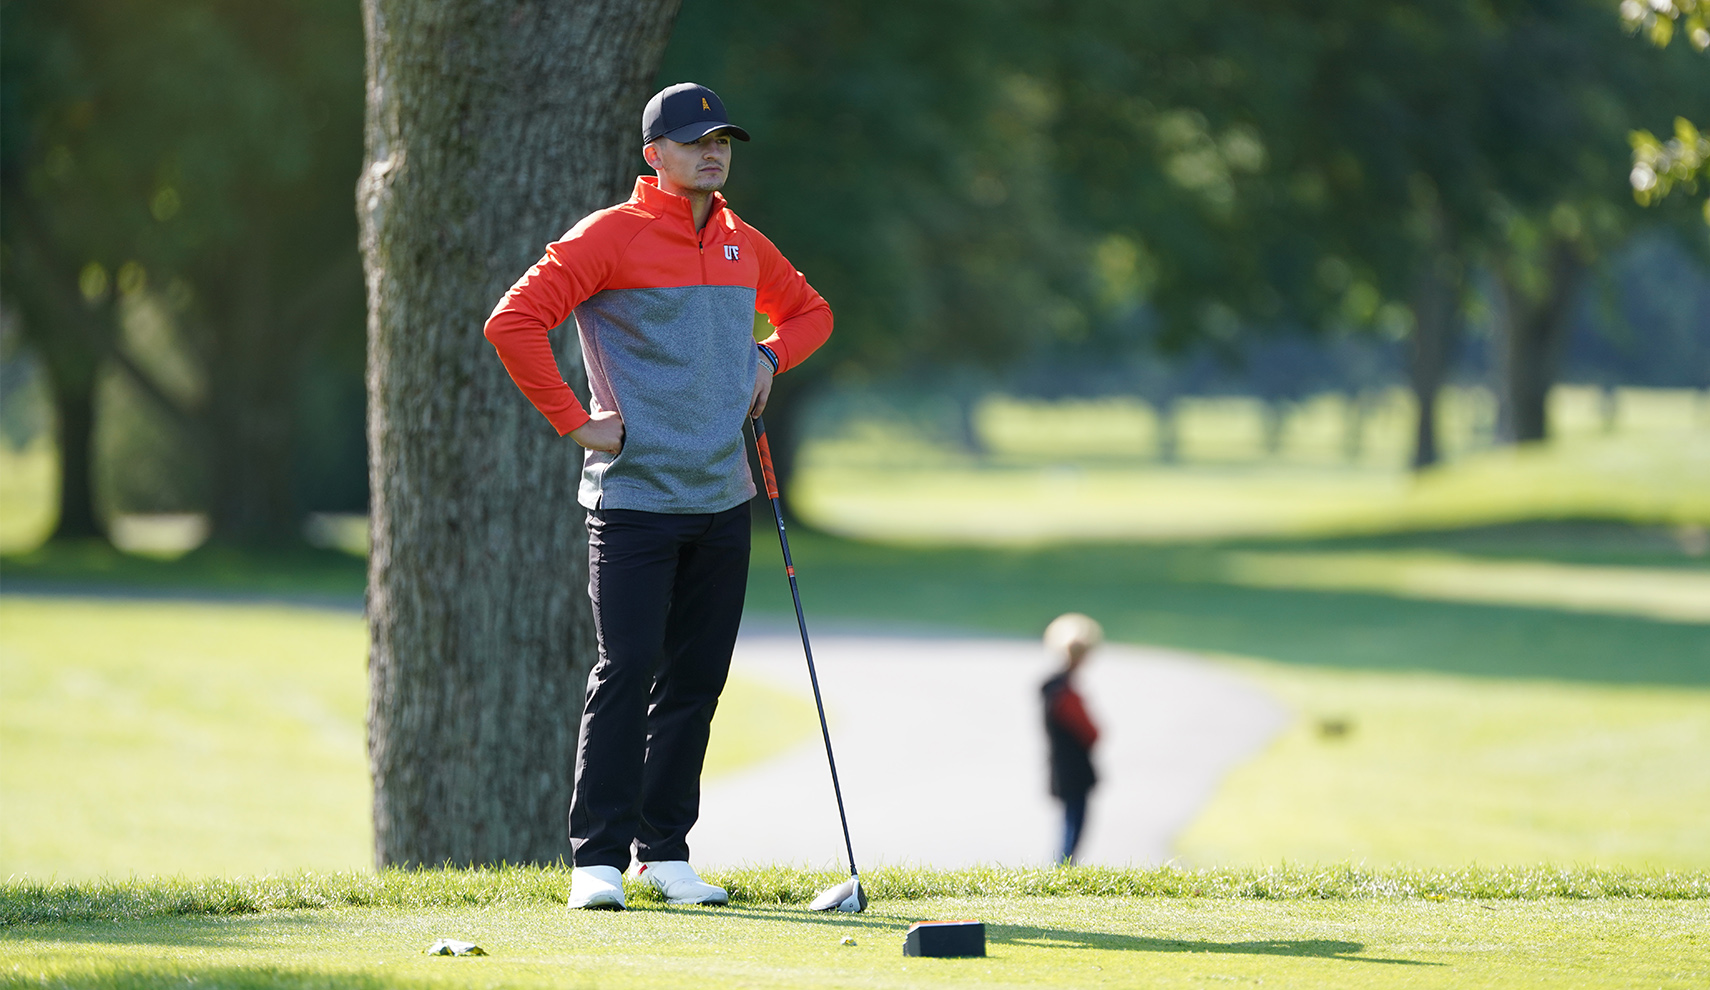 Male golfer looks on to fairway